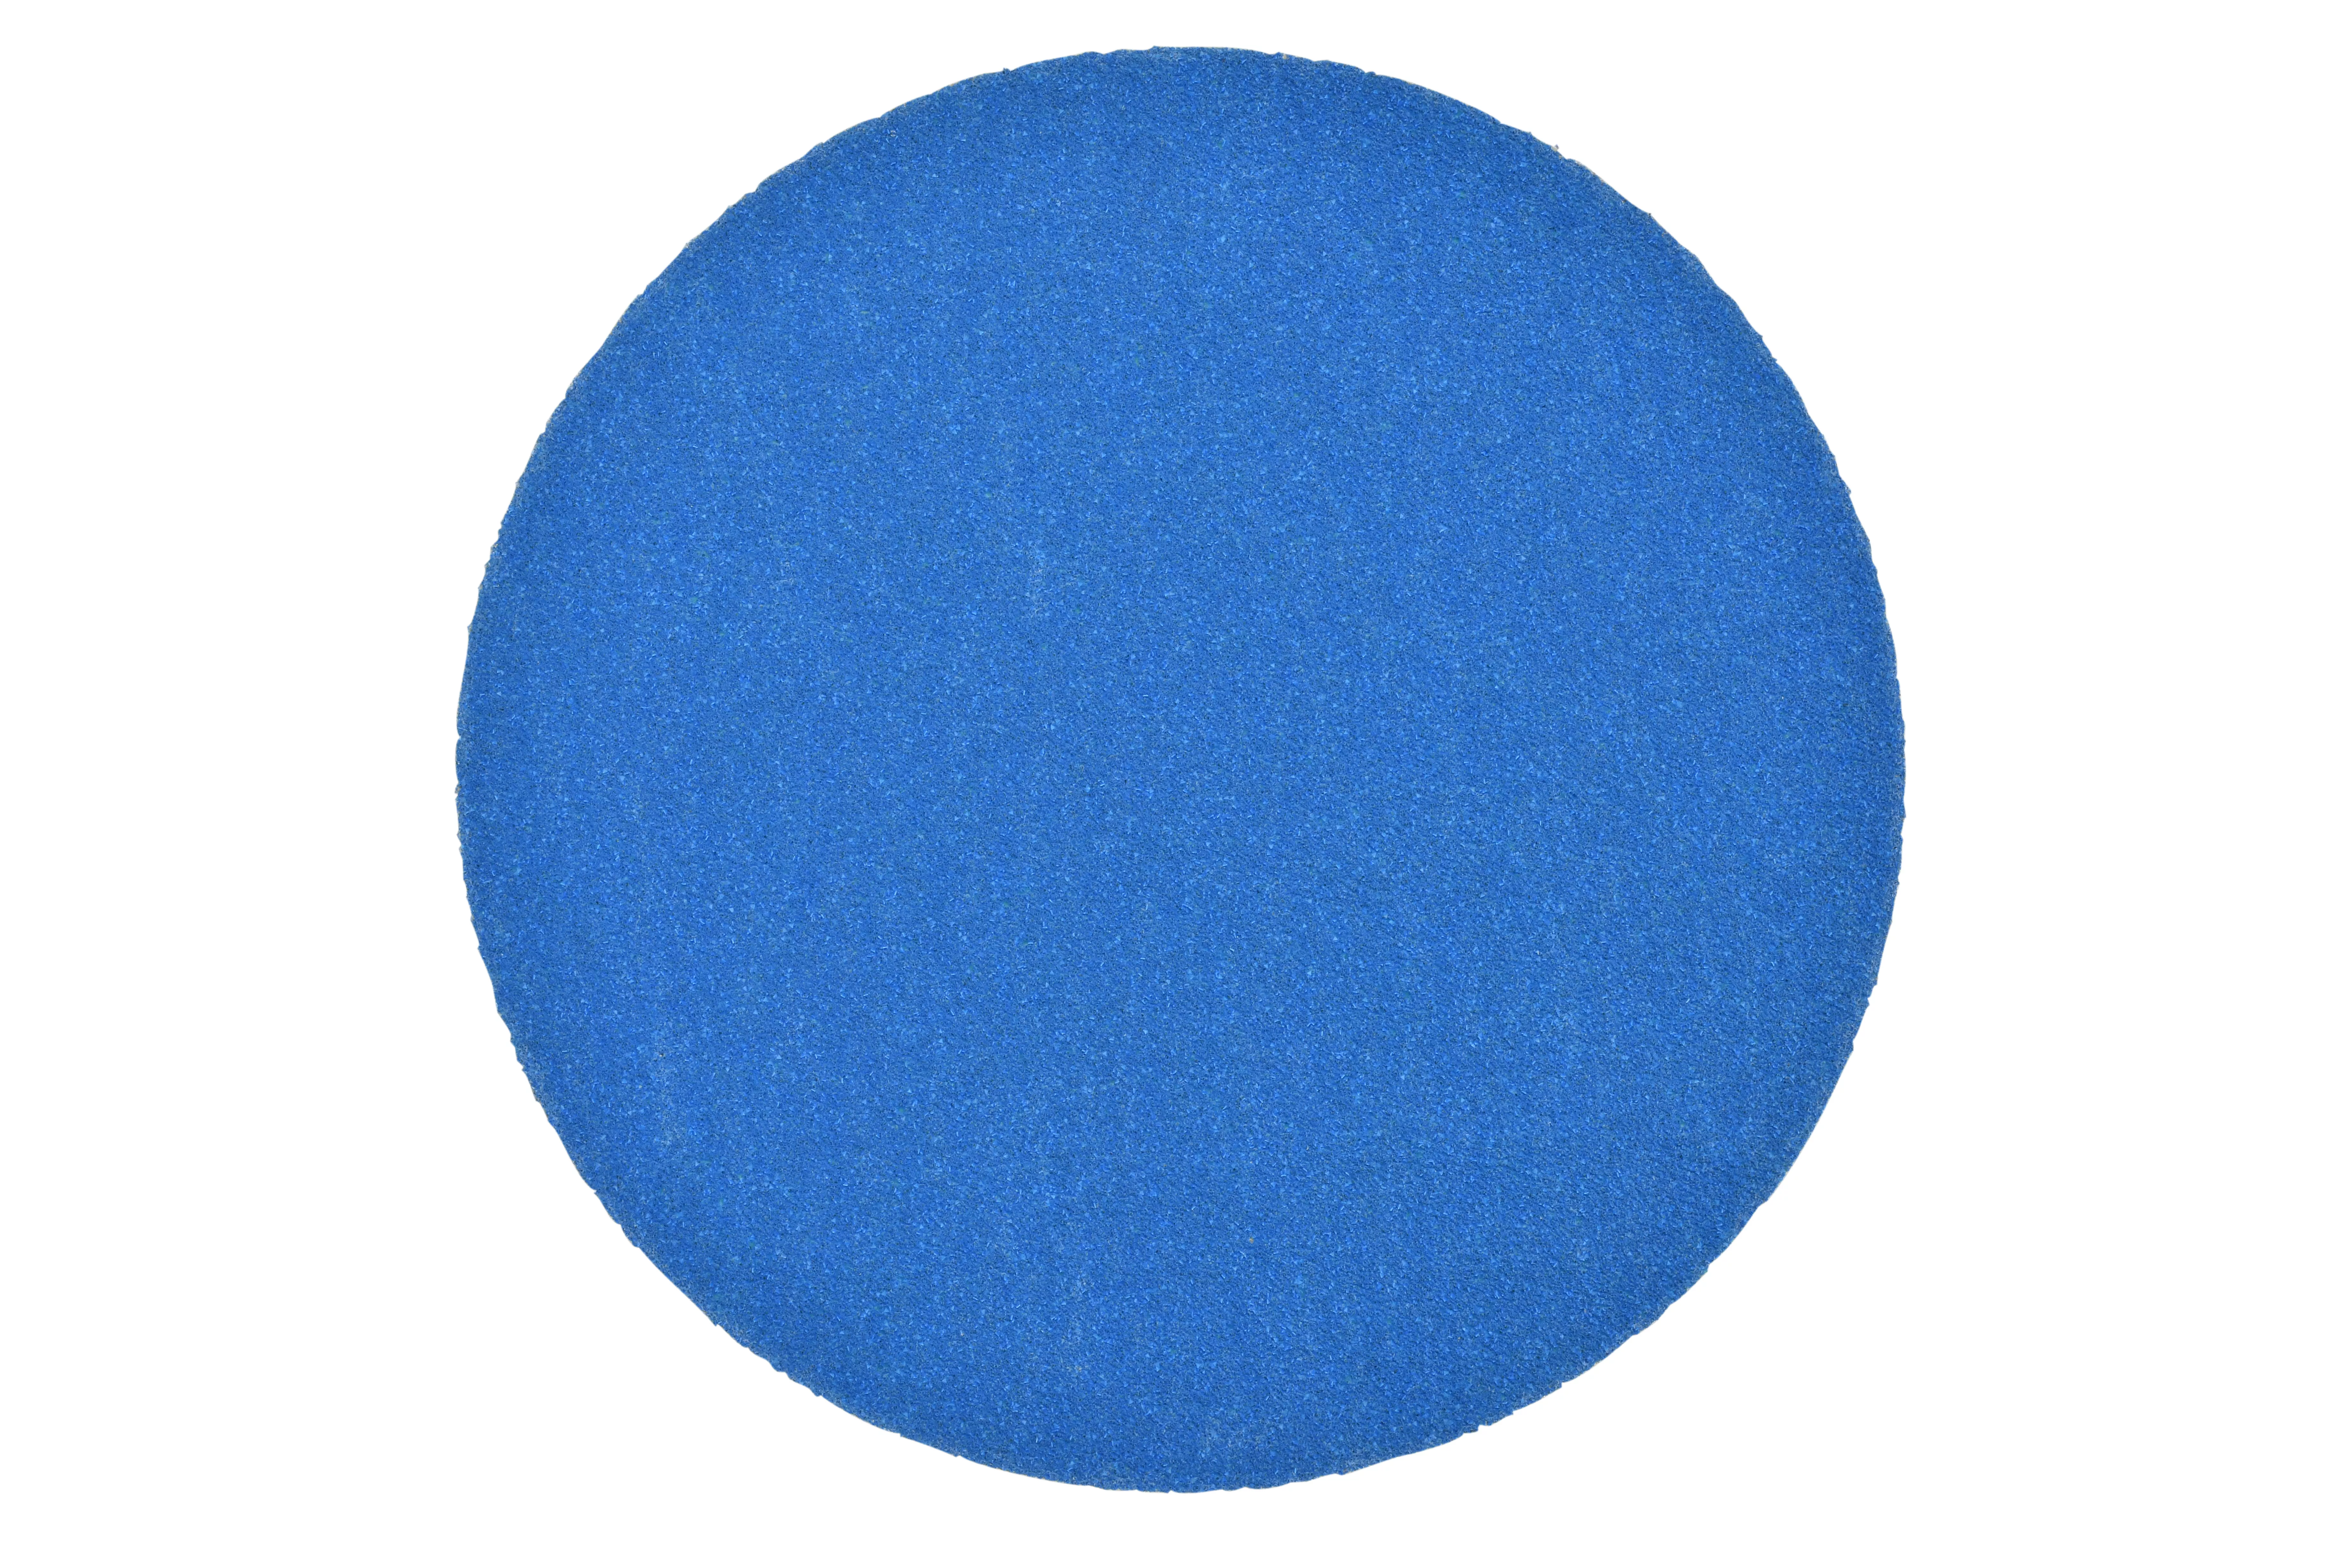 3M™ Hookit™ Blue Abrasive Disc, 36243, 6 in, 150 grade, No Hole, 50 discs per carton, 4 cartons per case